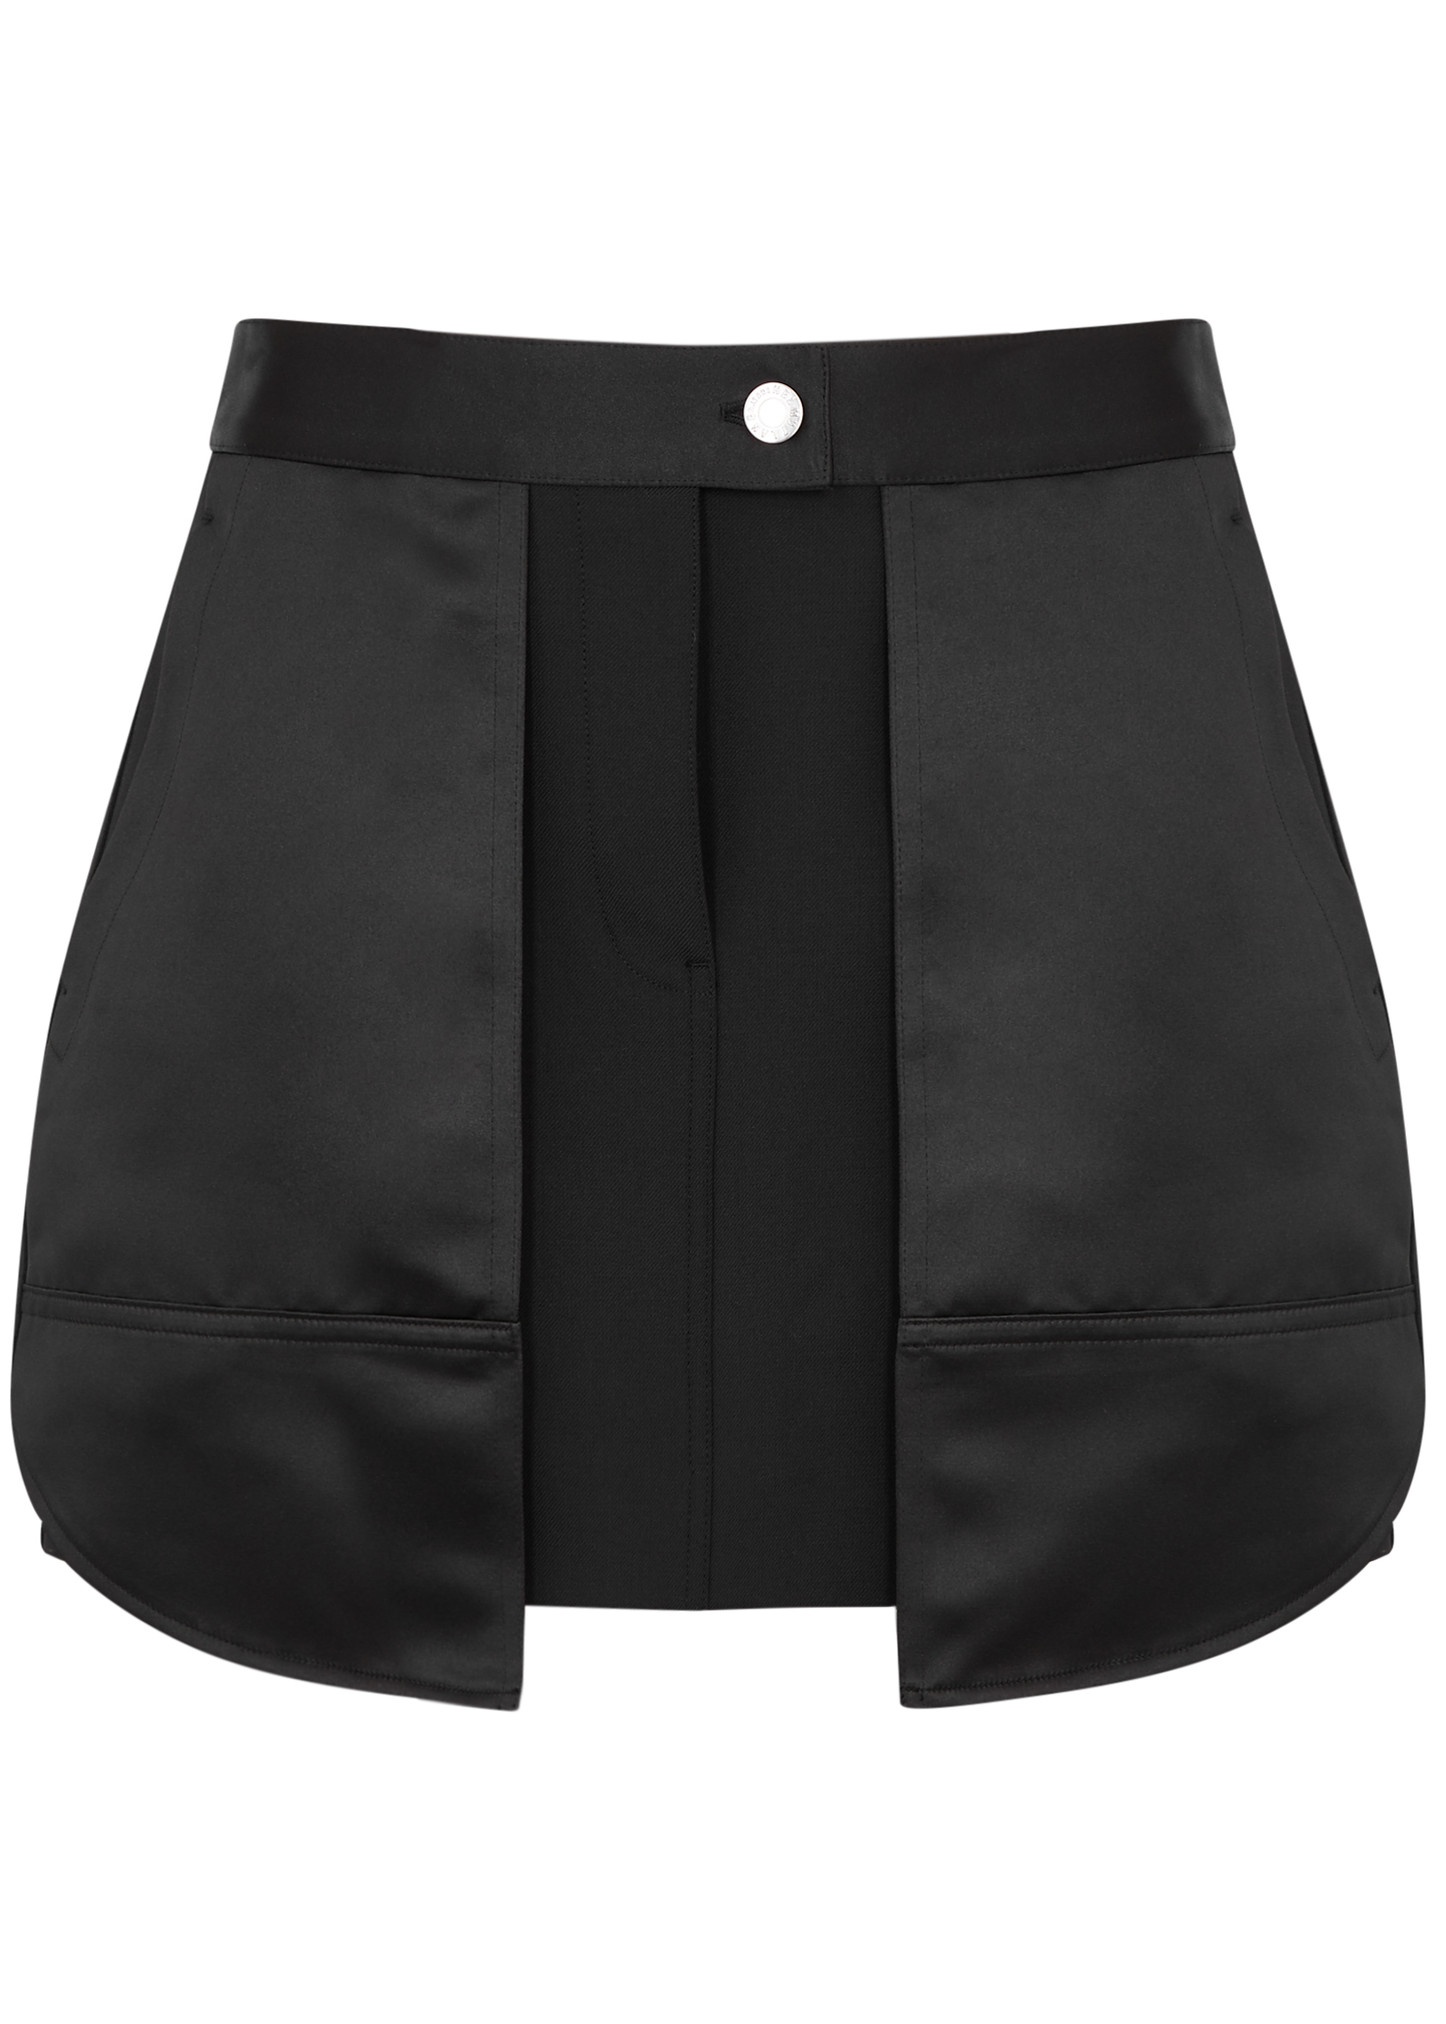 Inside Out panelled mini skirt - 1